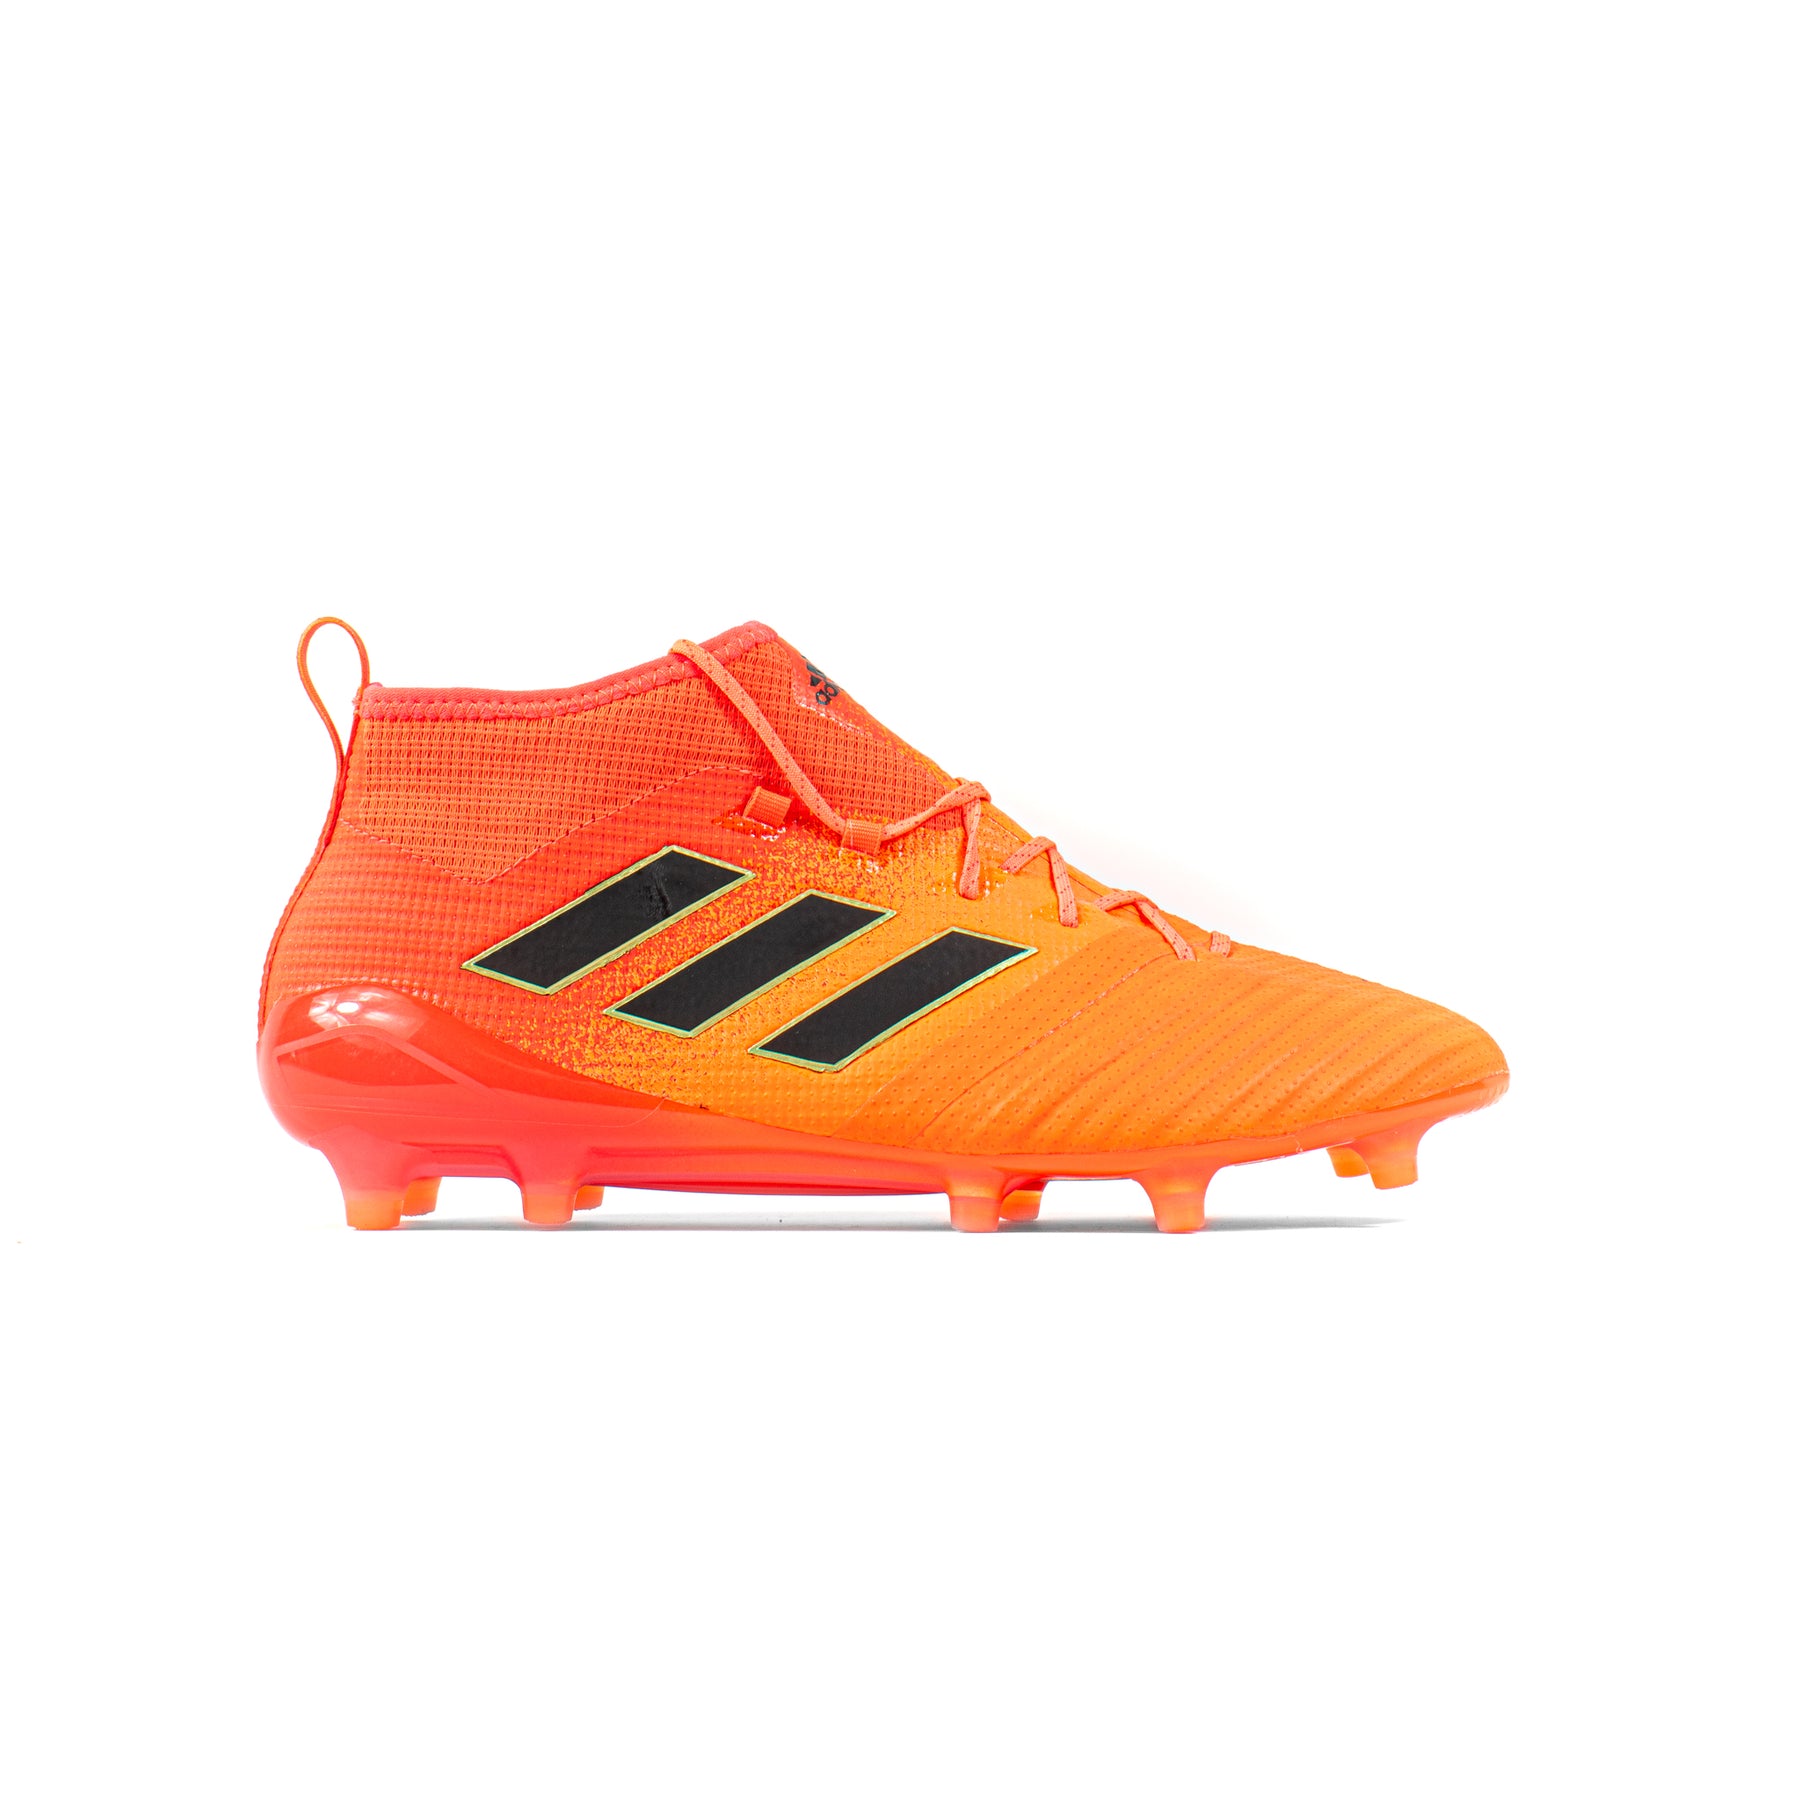 Adidas Ace Orange FG – Classic Soccer